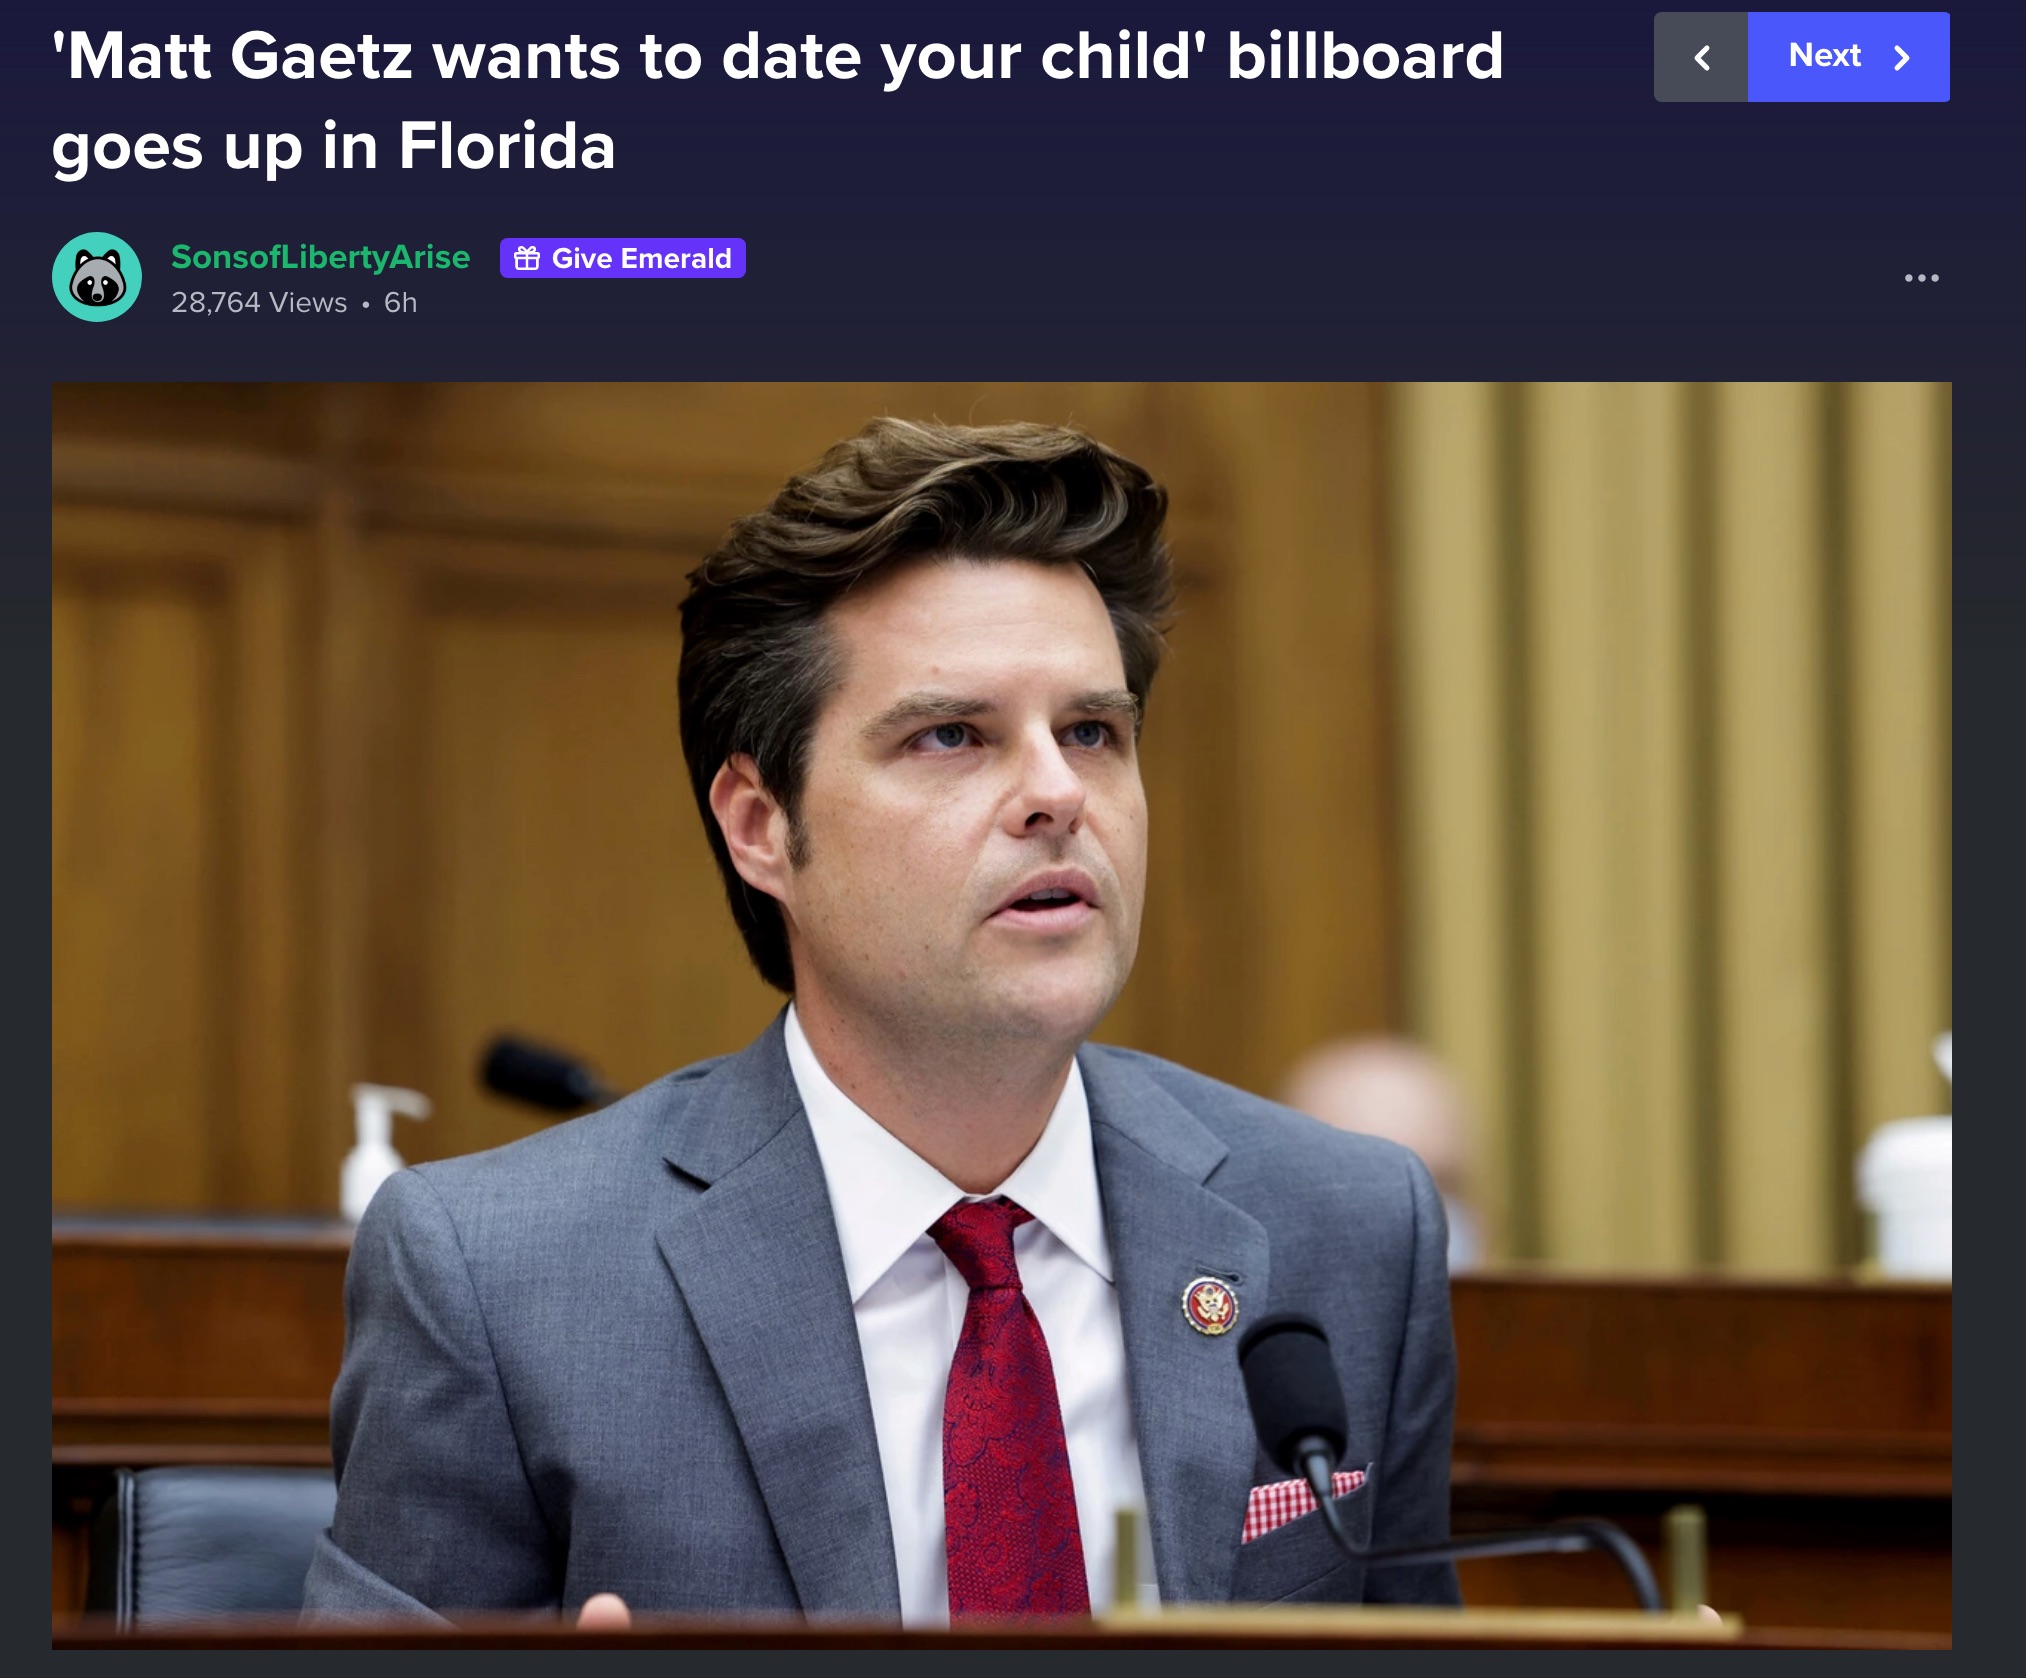 _Matt_Gaetz_wants_to_date_your_child__billboard_goes_up_in_Florida_-_mattgaetzisacreep_post_-_Imgur